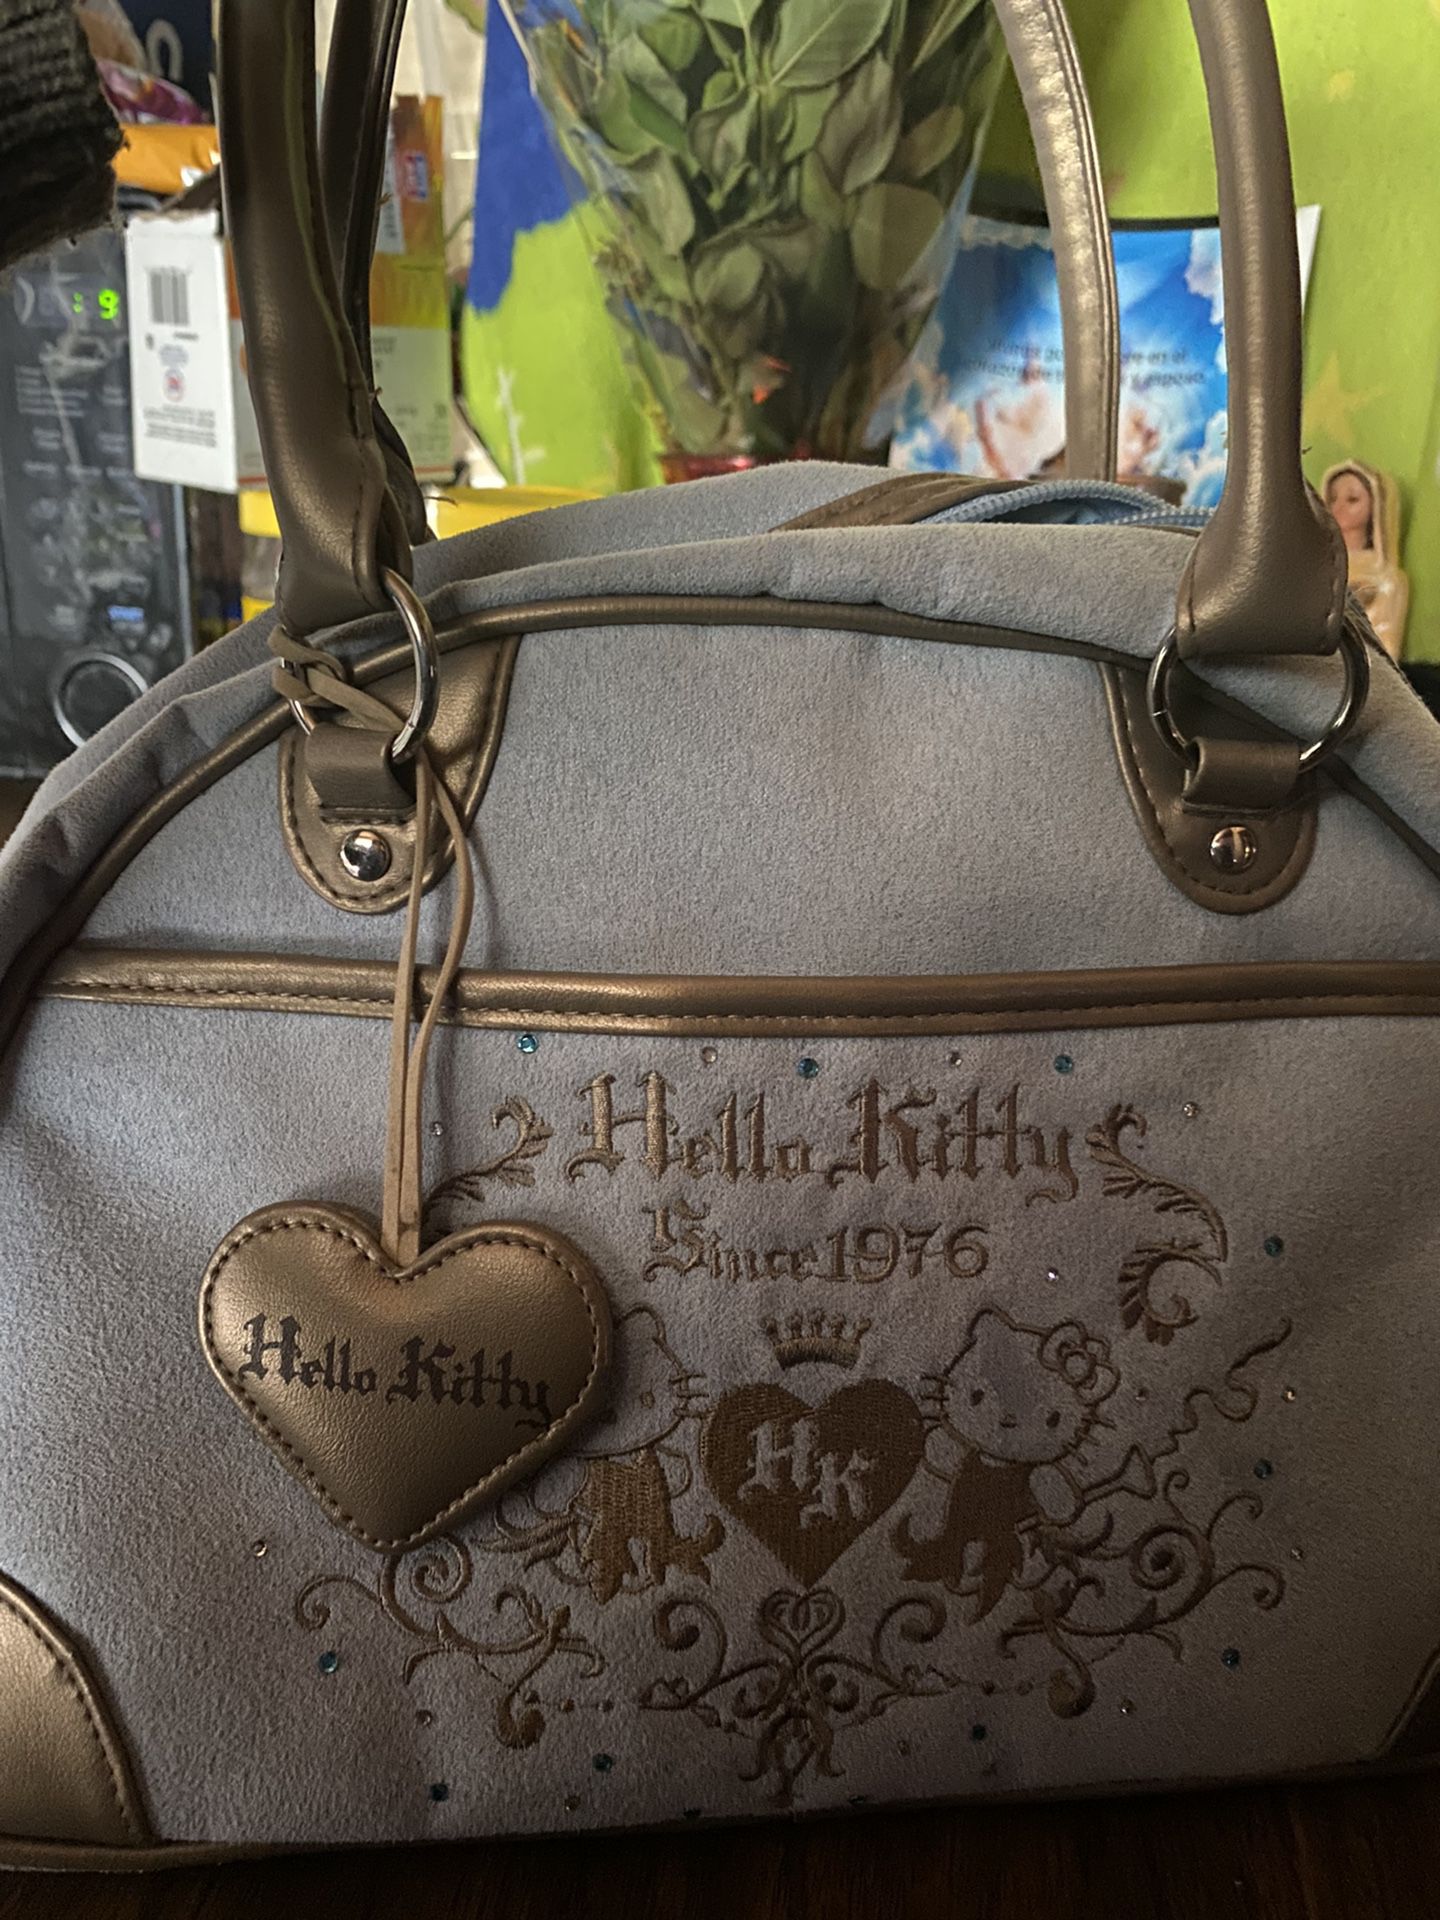 Hello Kitty 1976 Bag Like New for Sale in Bellflower, CA - OfferUp